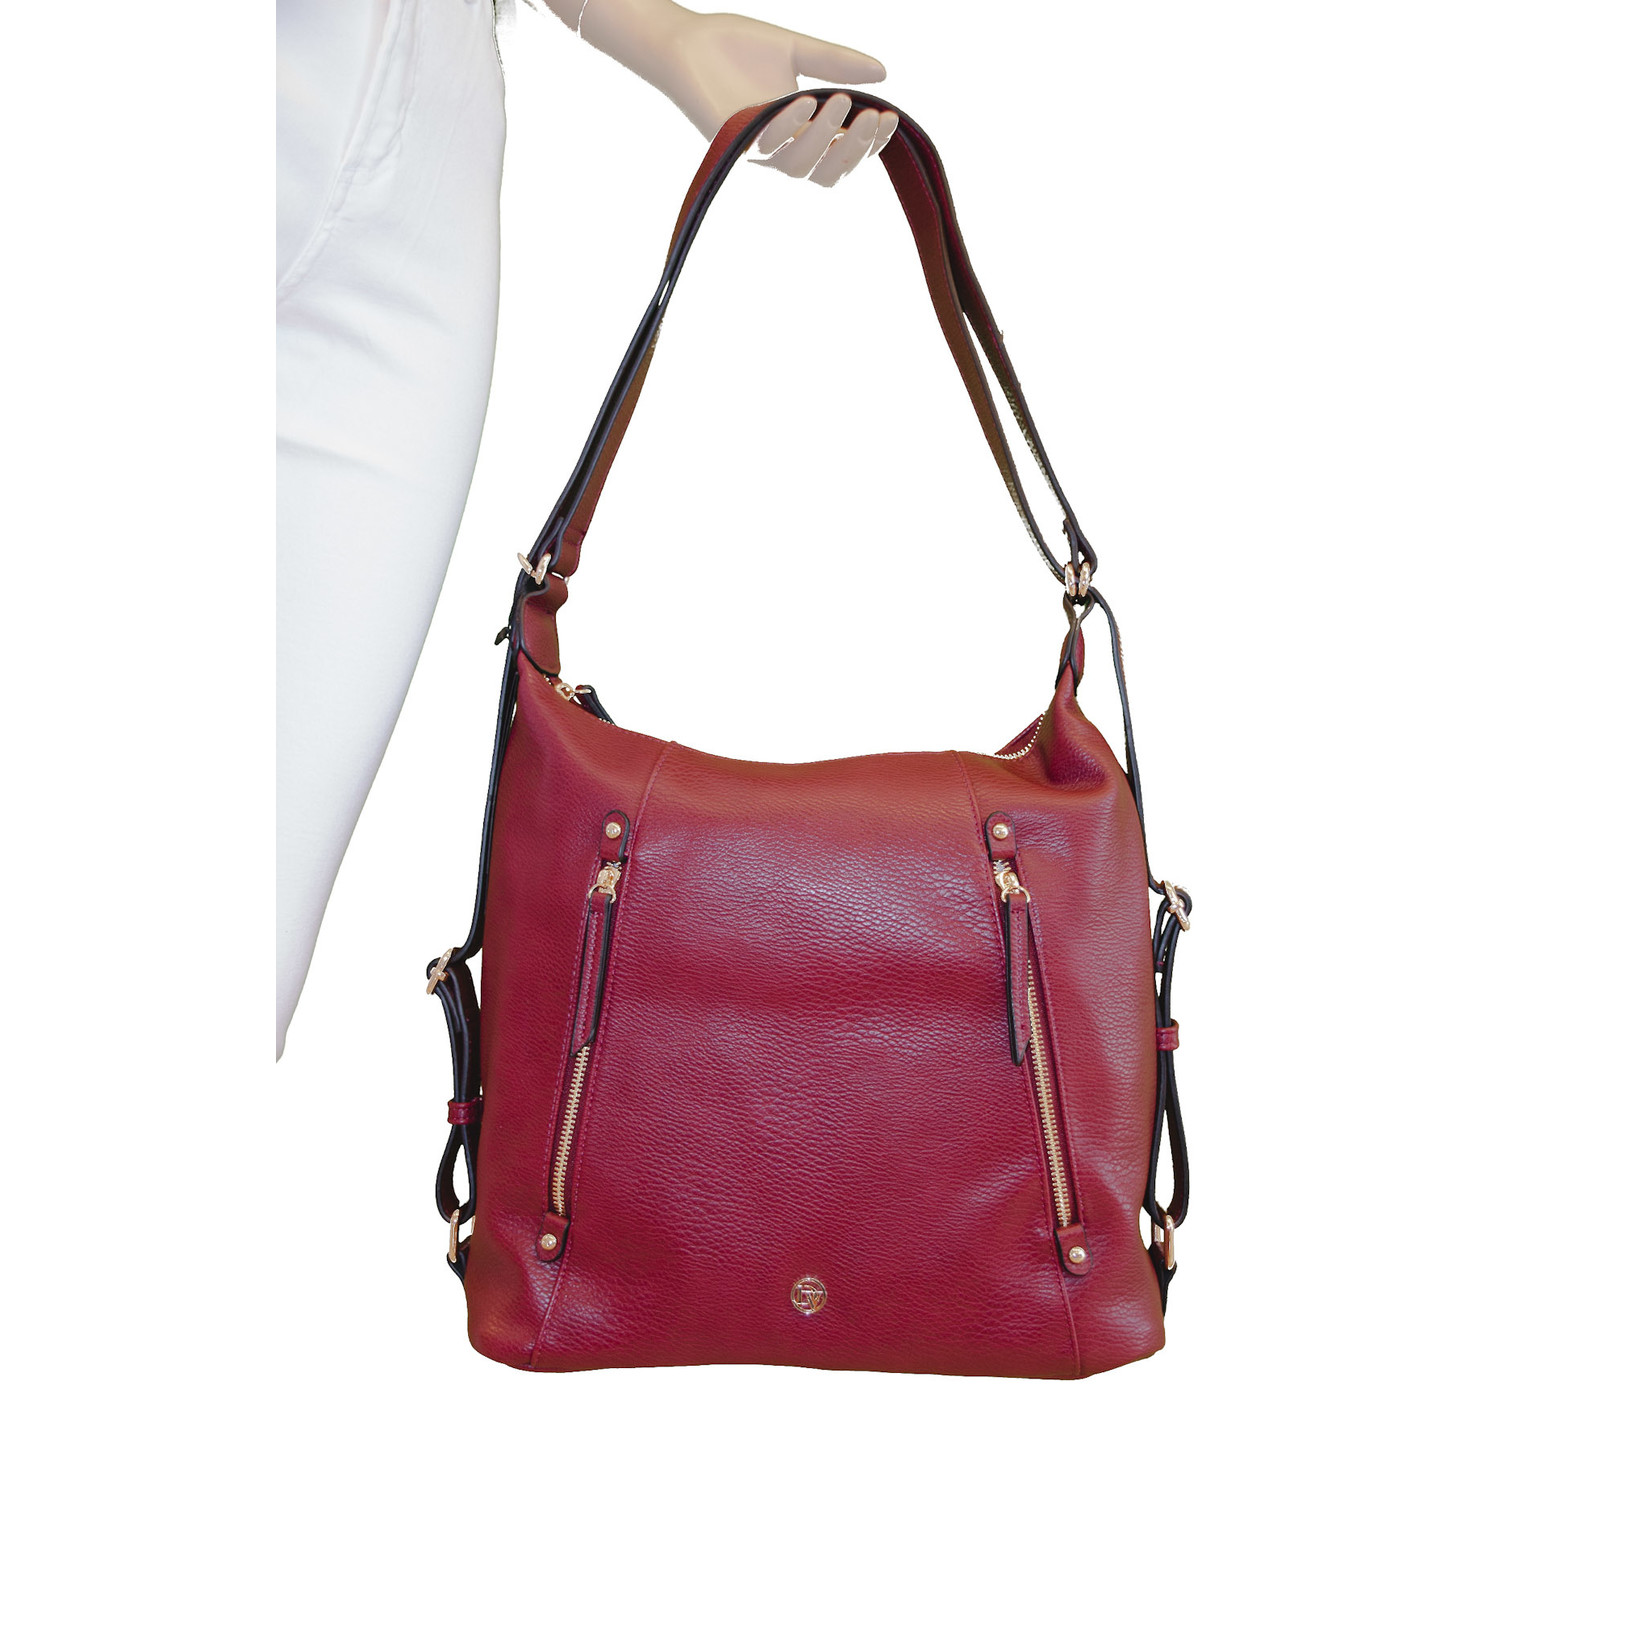 La Diva Hobo Style Handbag